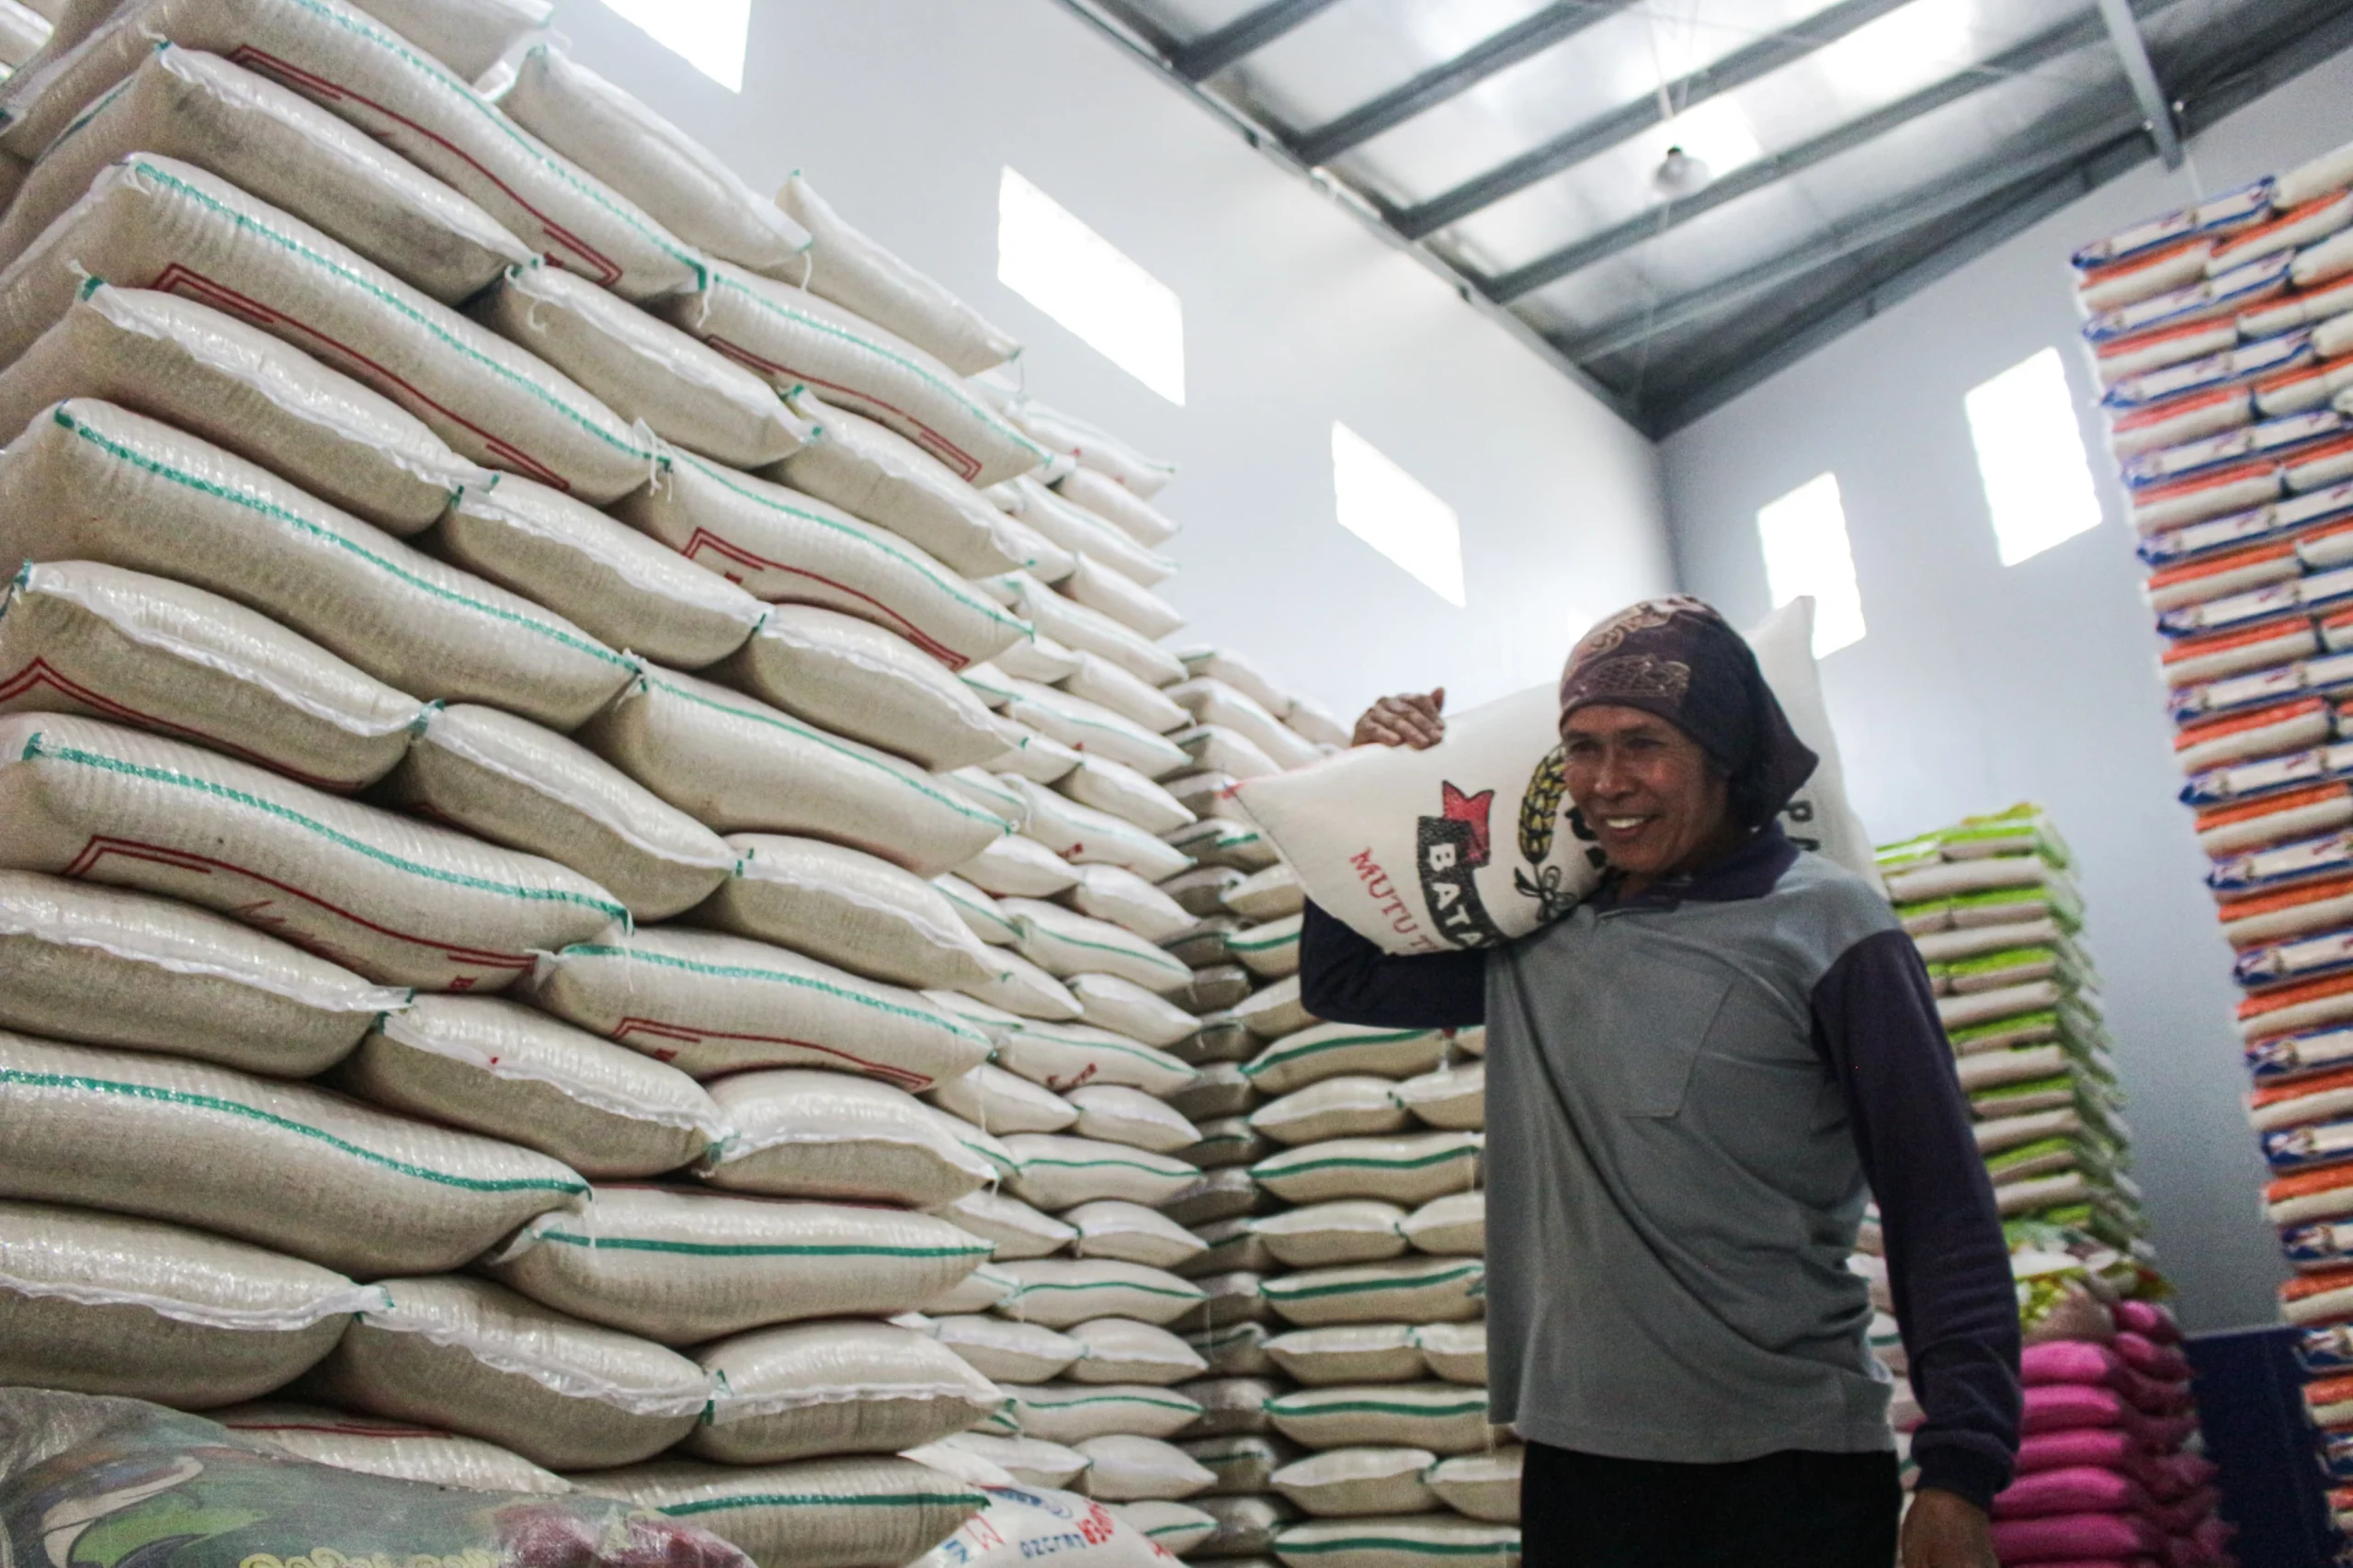 ekerja mengangkut beras di distributor beras kawasan Cibiru, Kota Bandung. (Pandu Muslim/Jabar Ekspres)